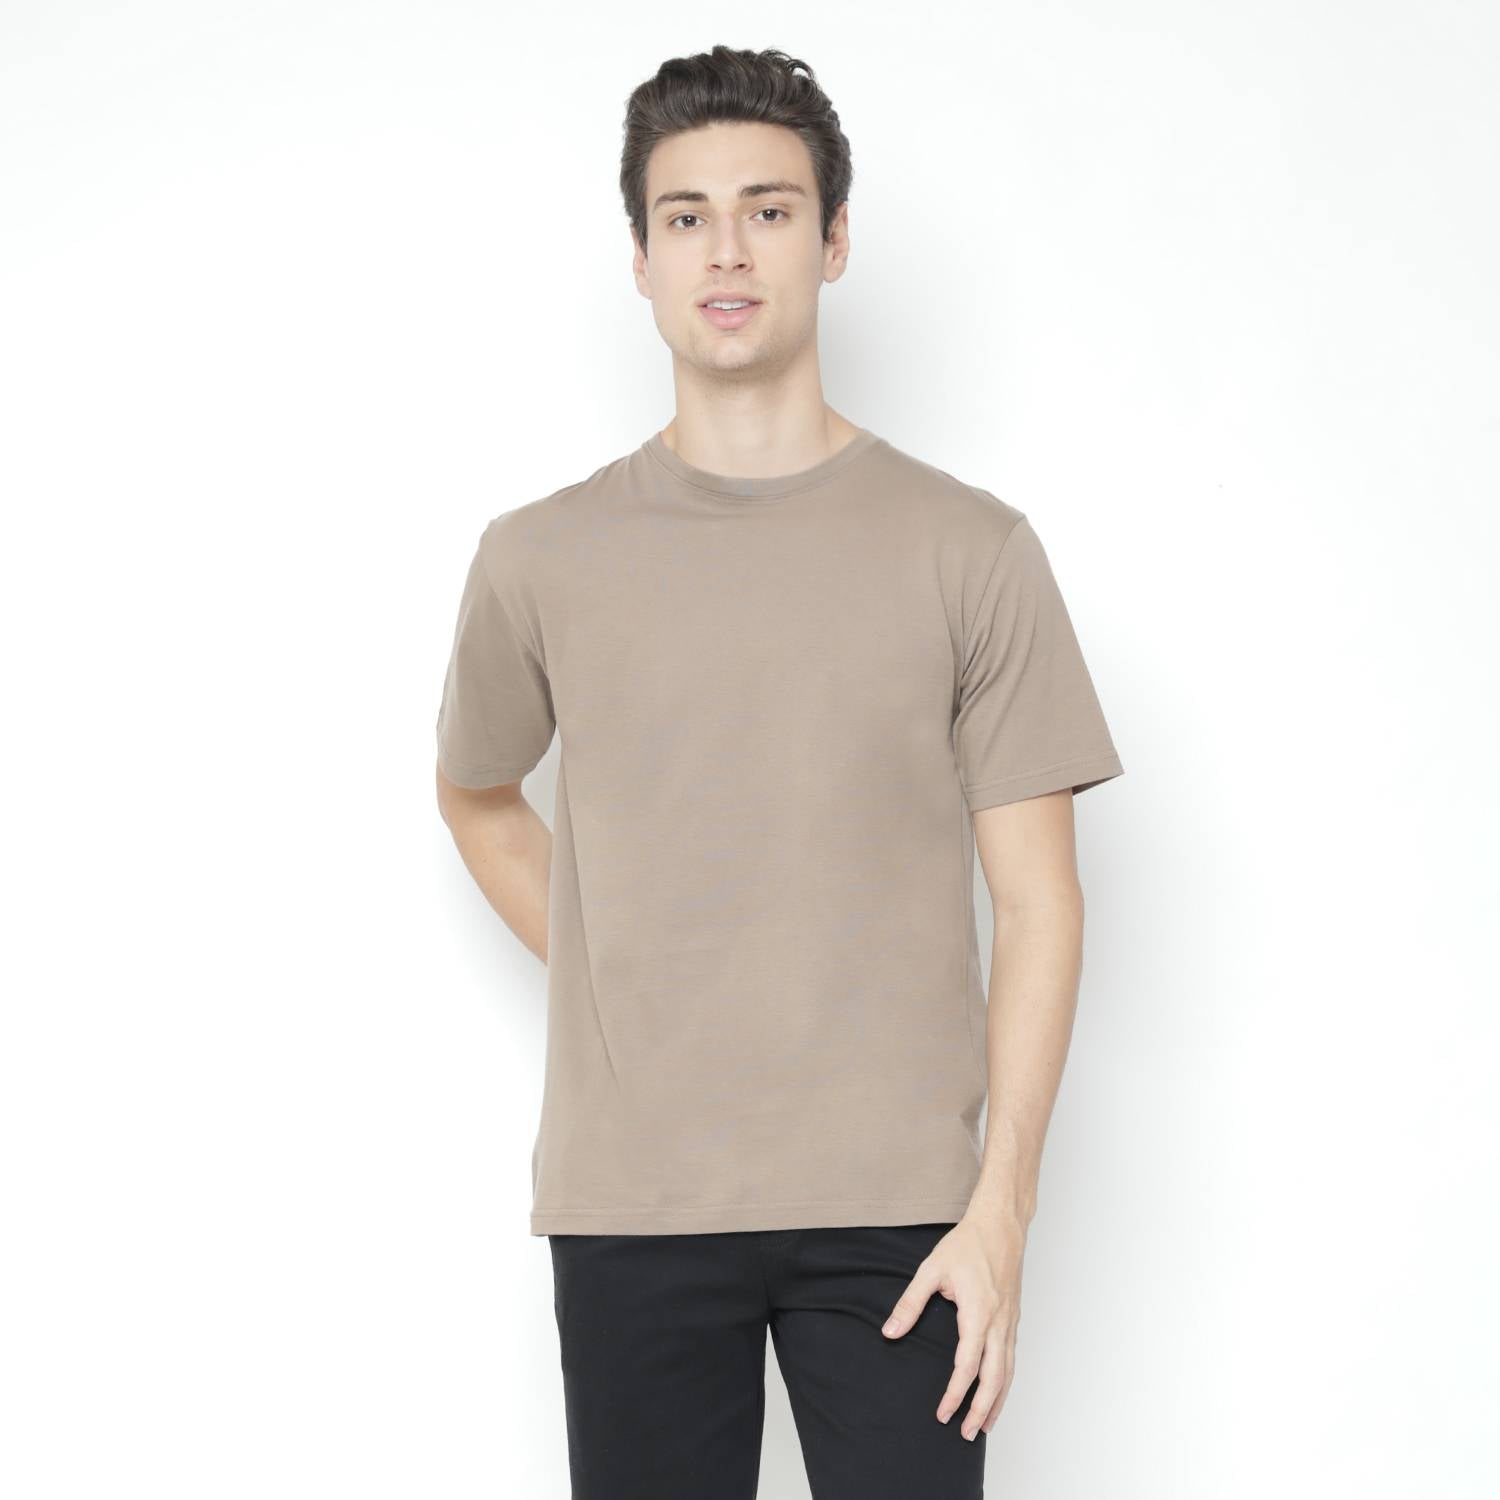 Troy Comfort T-Shirt Short Sleeve